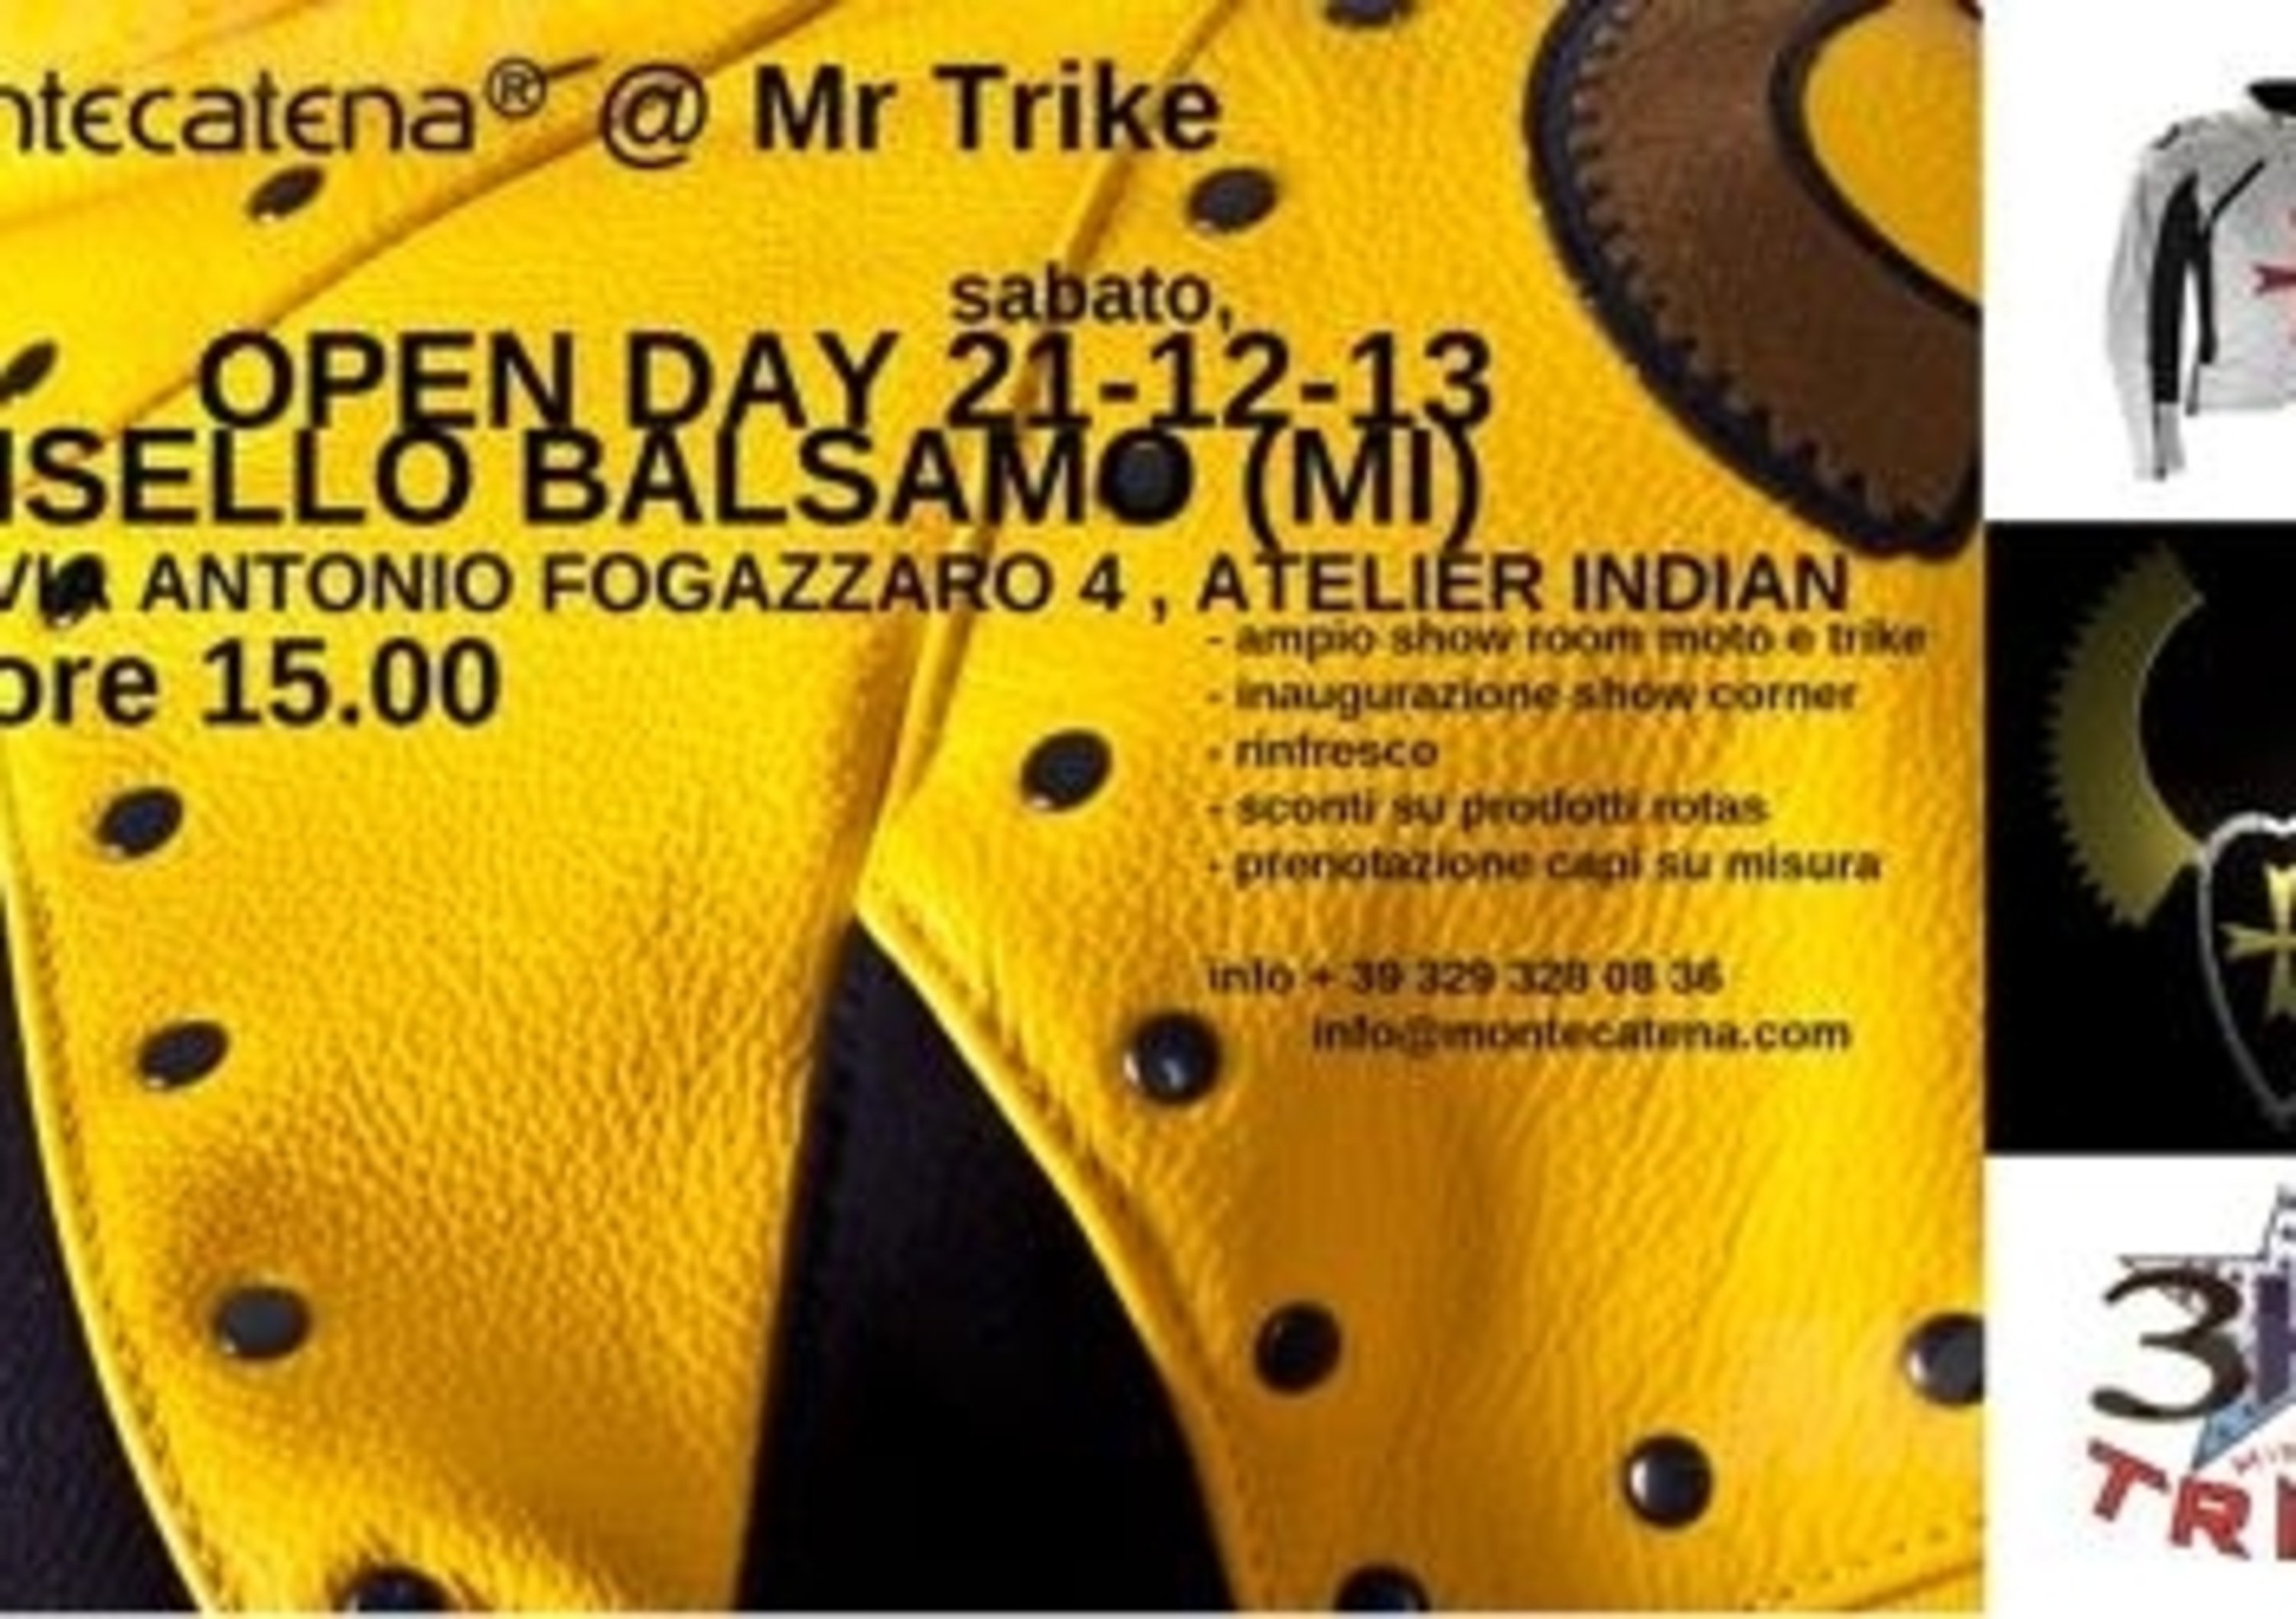 Open day Montecatena @Mr Trike